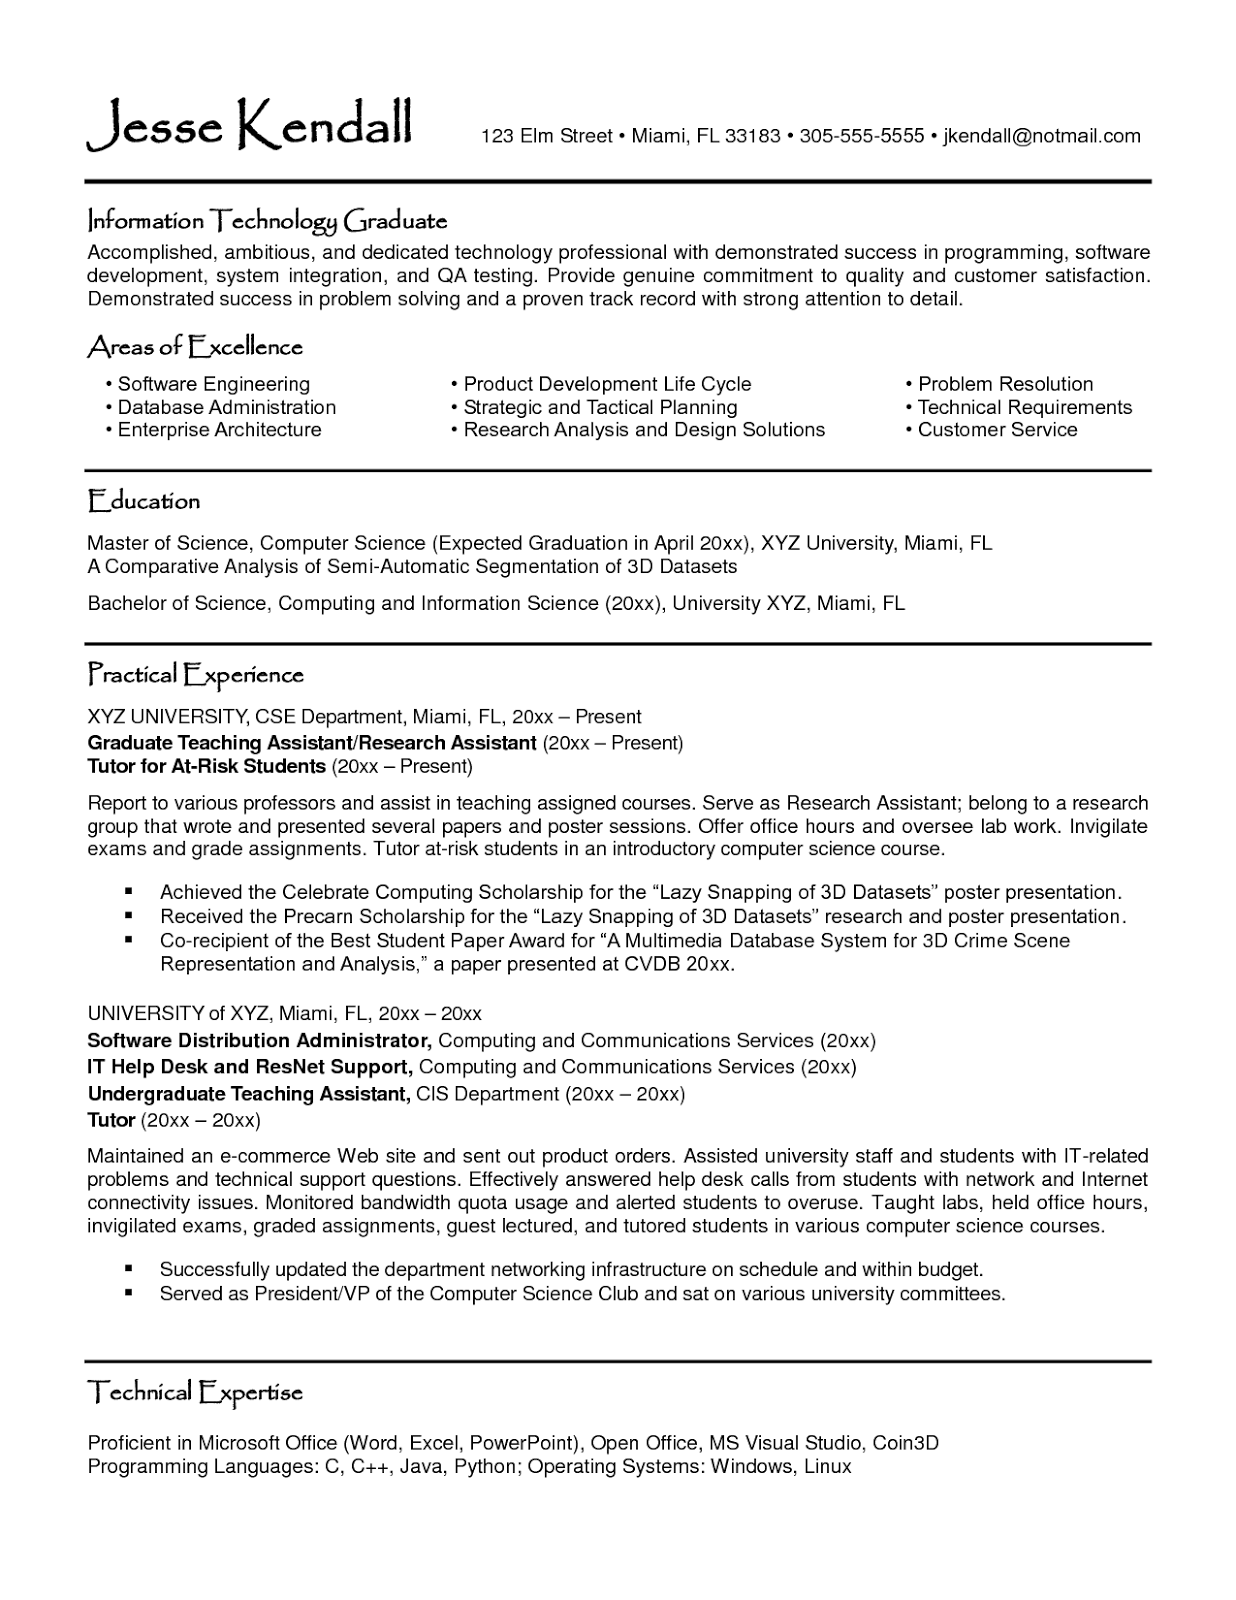 Business school resume length